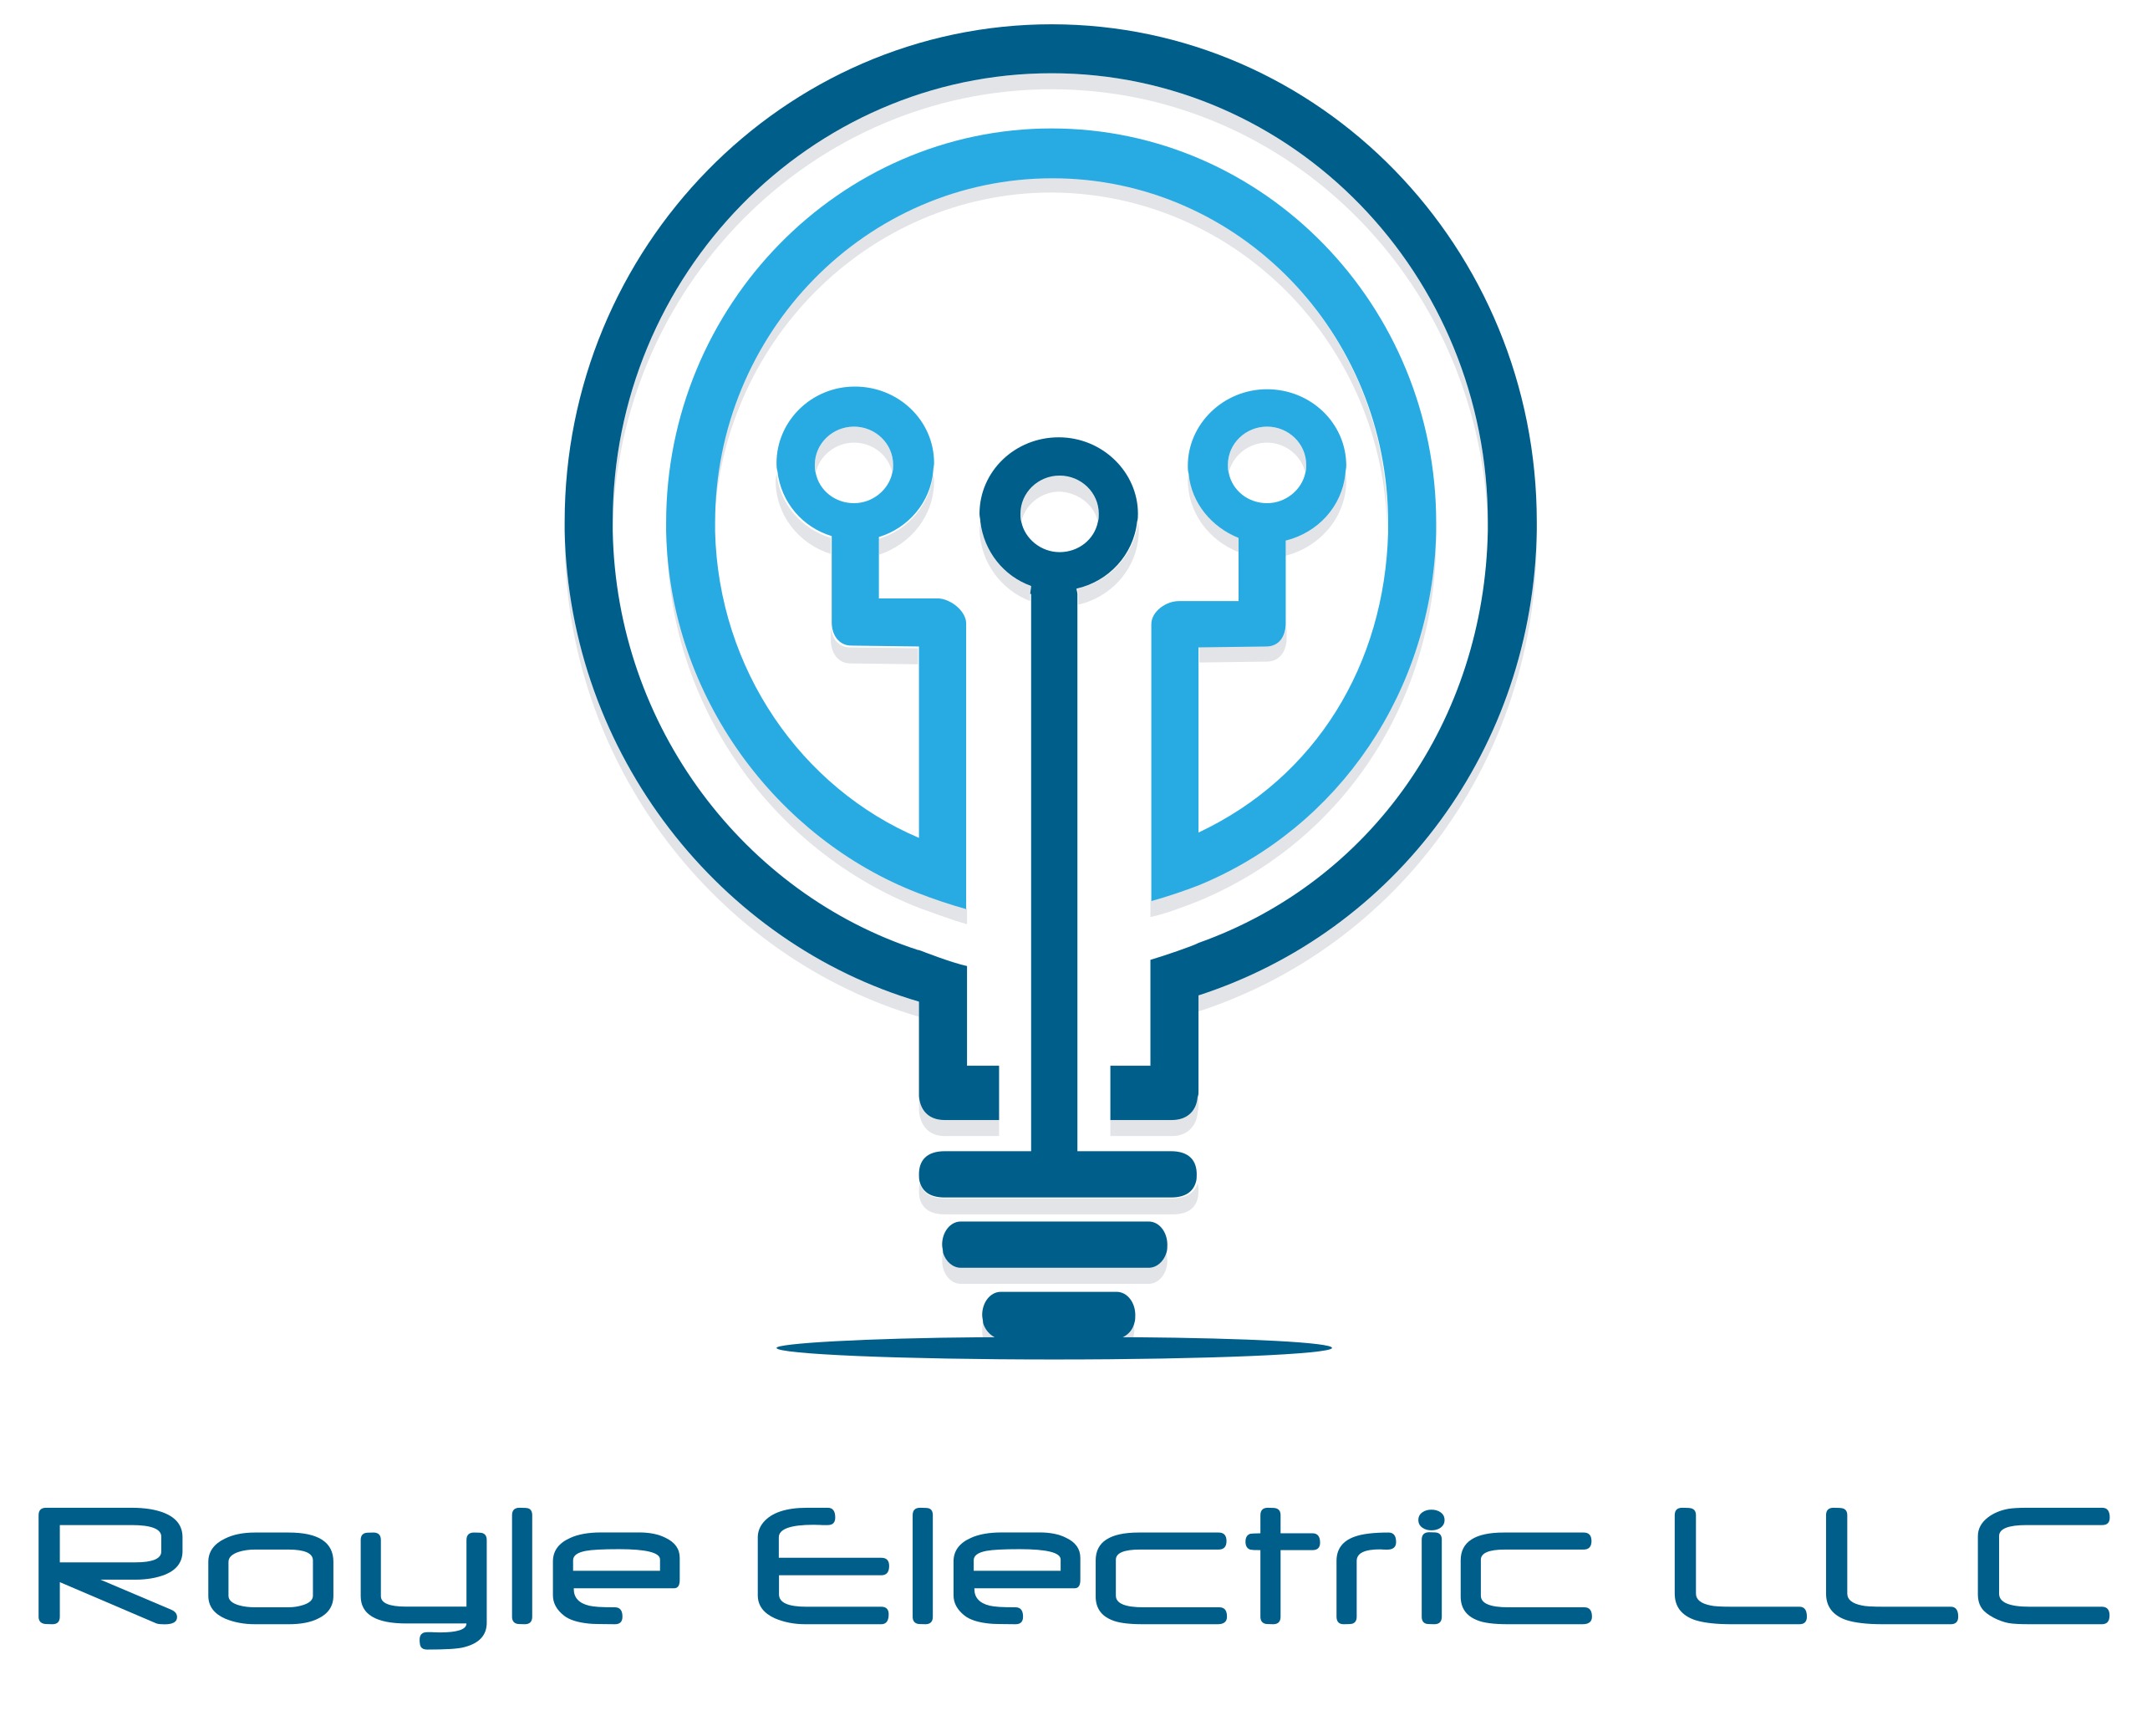 Royle Electric LLC logo file